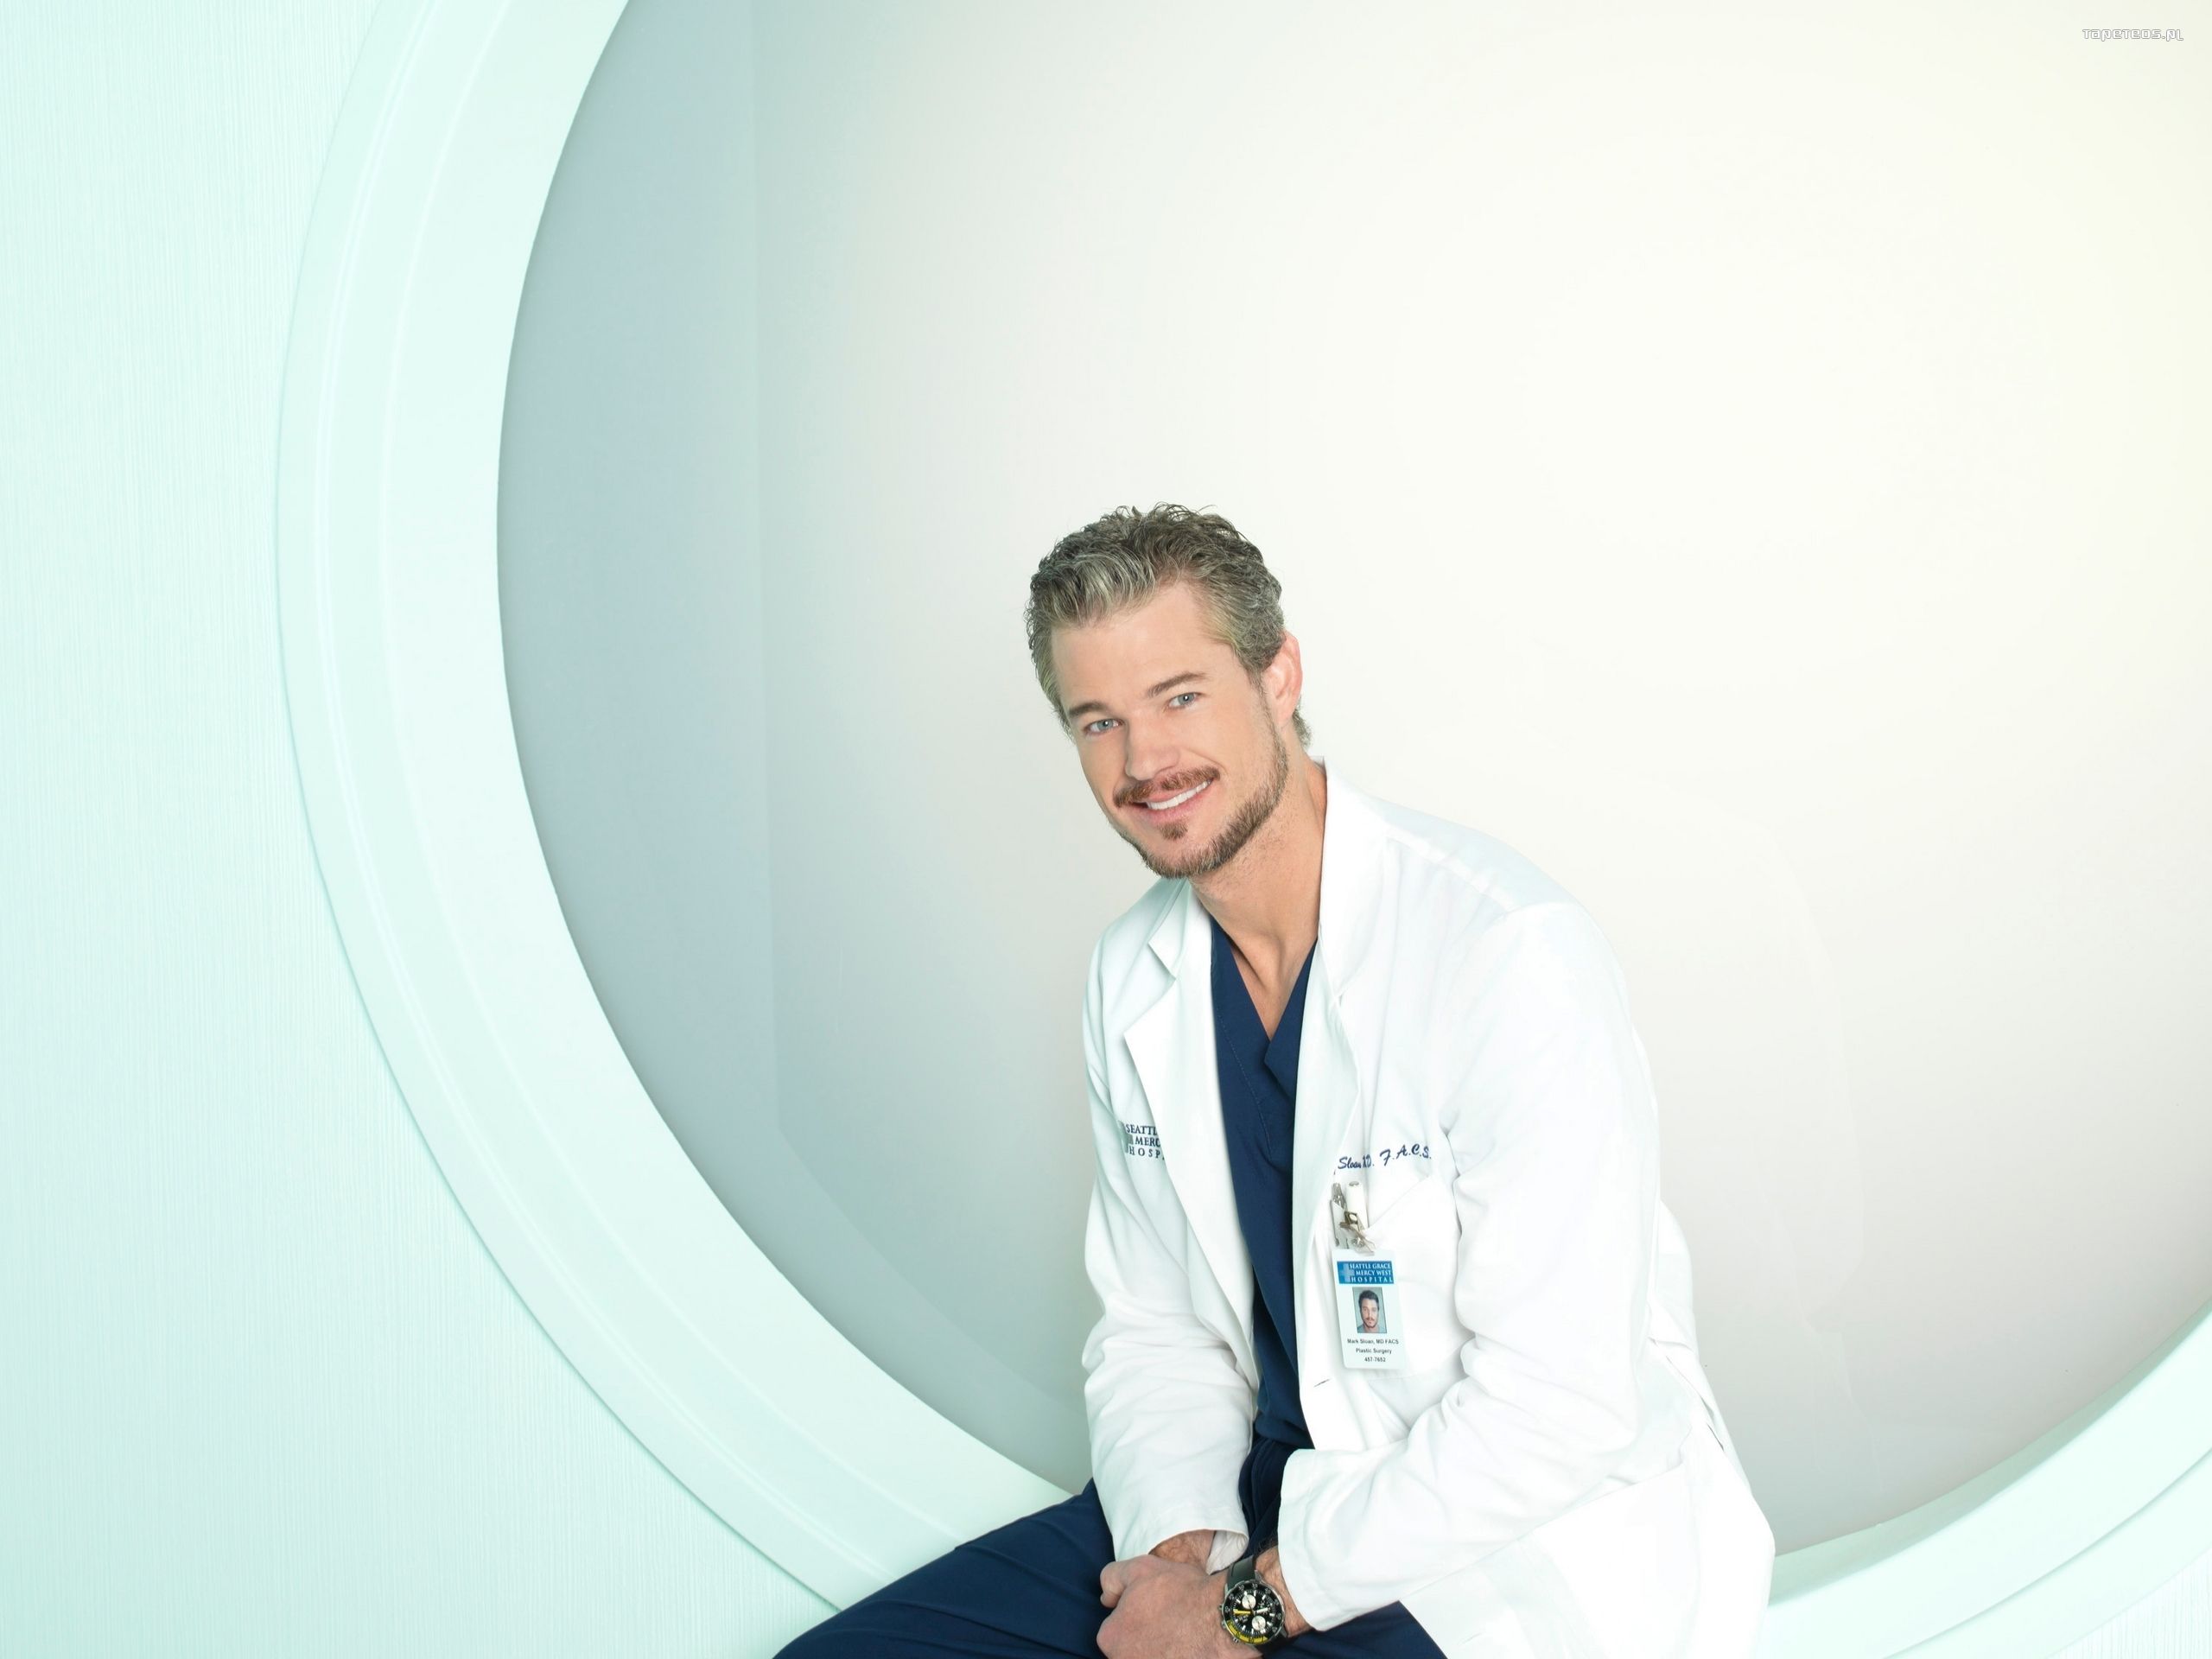 Chirurdzy, Greys Anatomy 034 Eric Dane